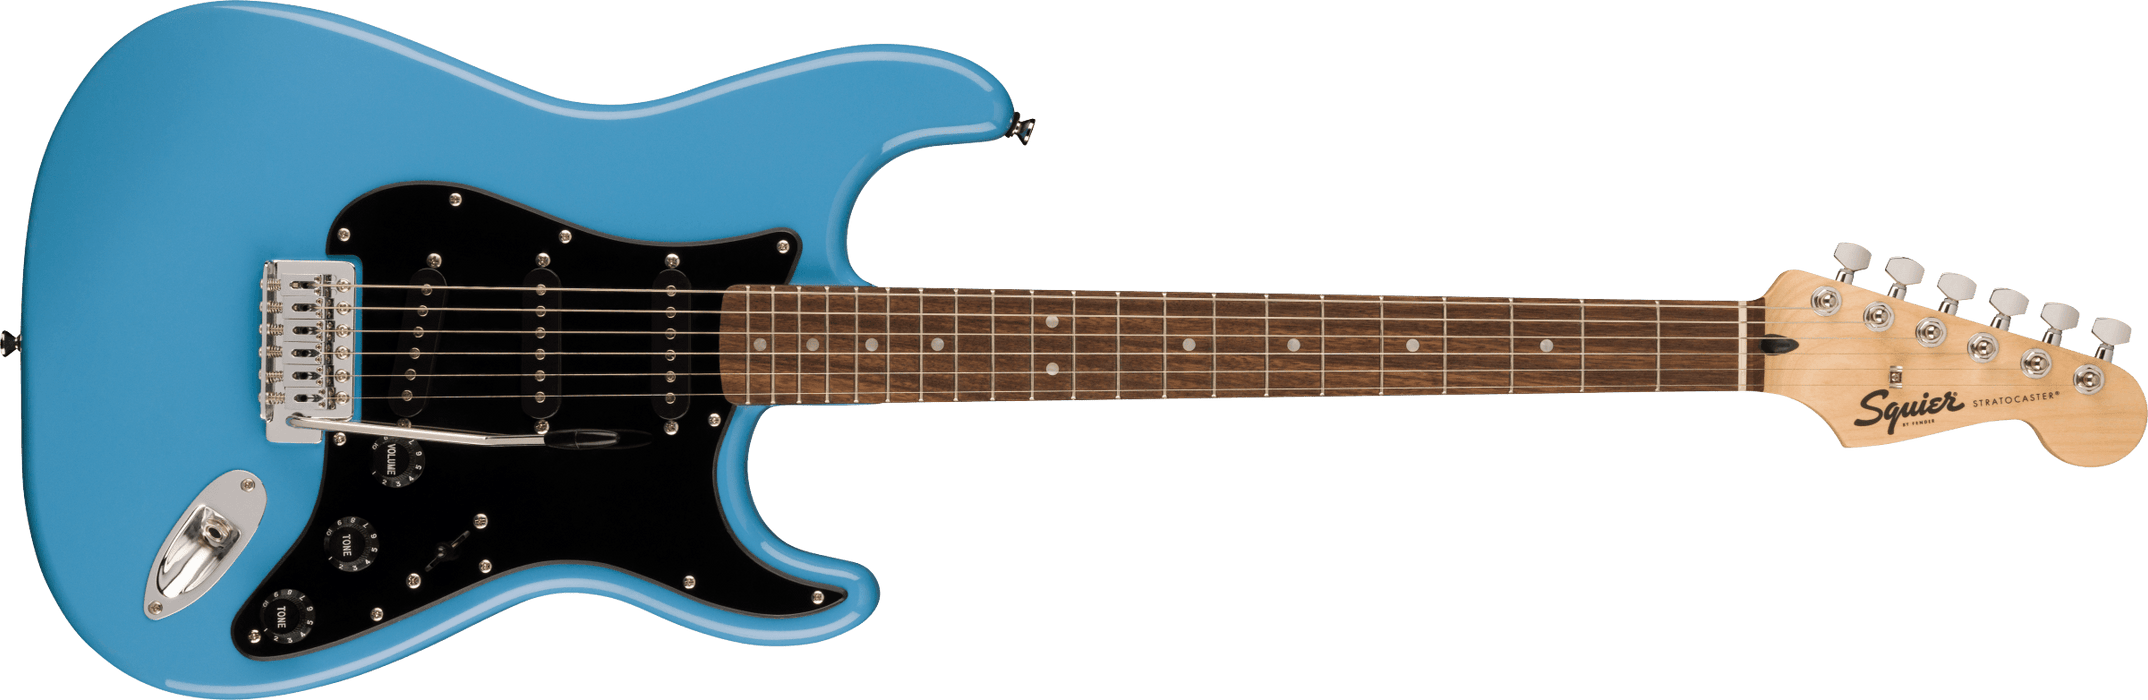 Fender Squier Sonic™ Stratocaster®, Laurel Fingerboard, Black Pickguard, California Blue